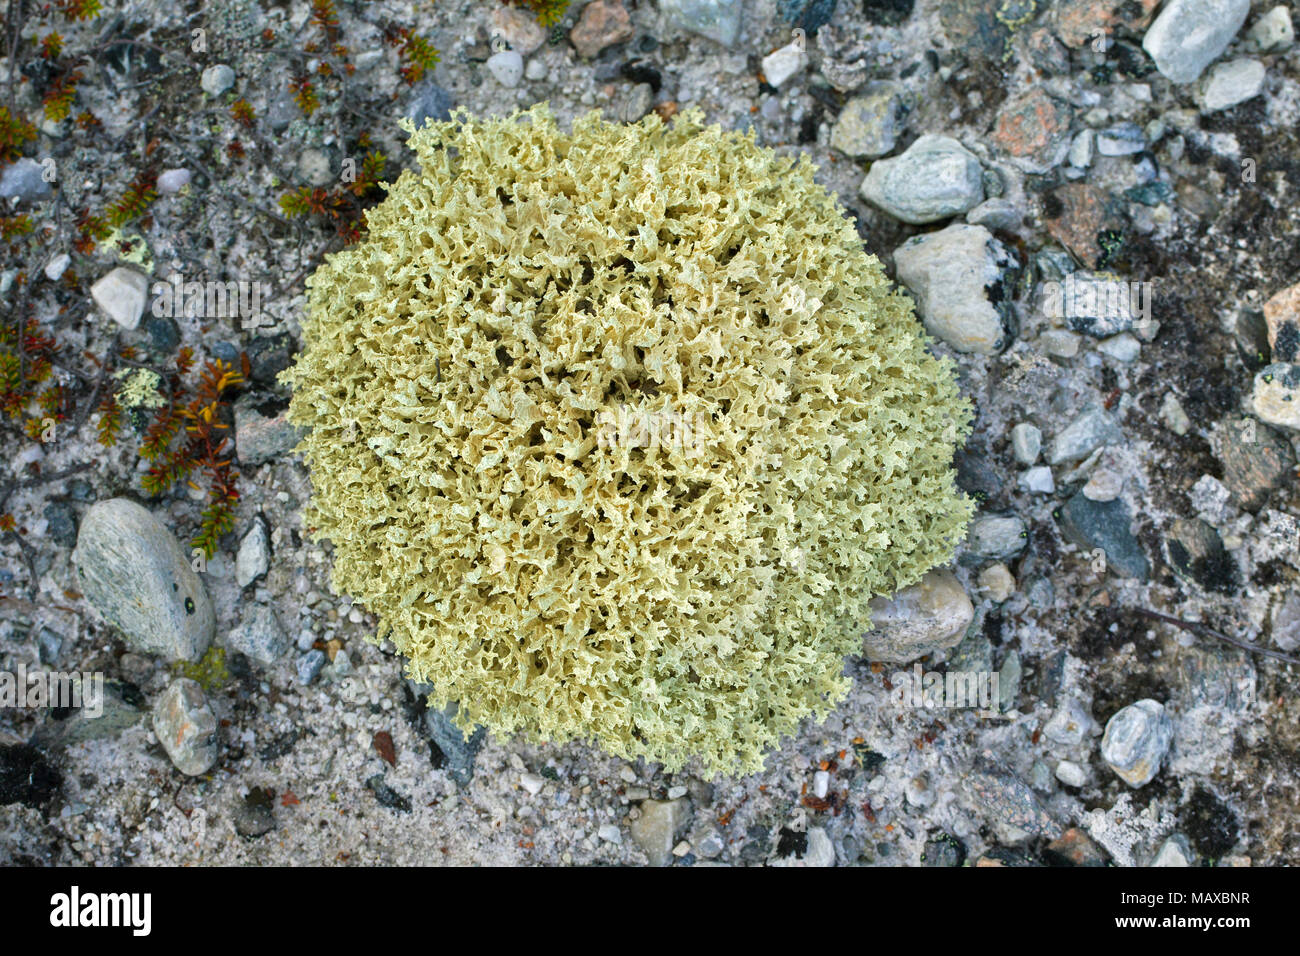 Iceland moss / Iceland lichen (Cetraria islandica / Lichen islandicus) circumpolar lichen of the arctic and mountainous regions of northern countries Stock Photo